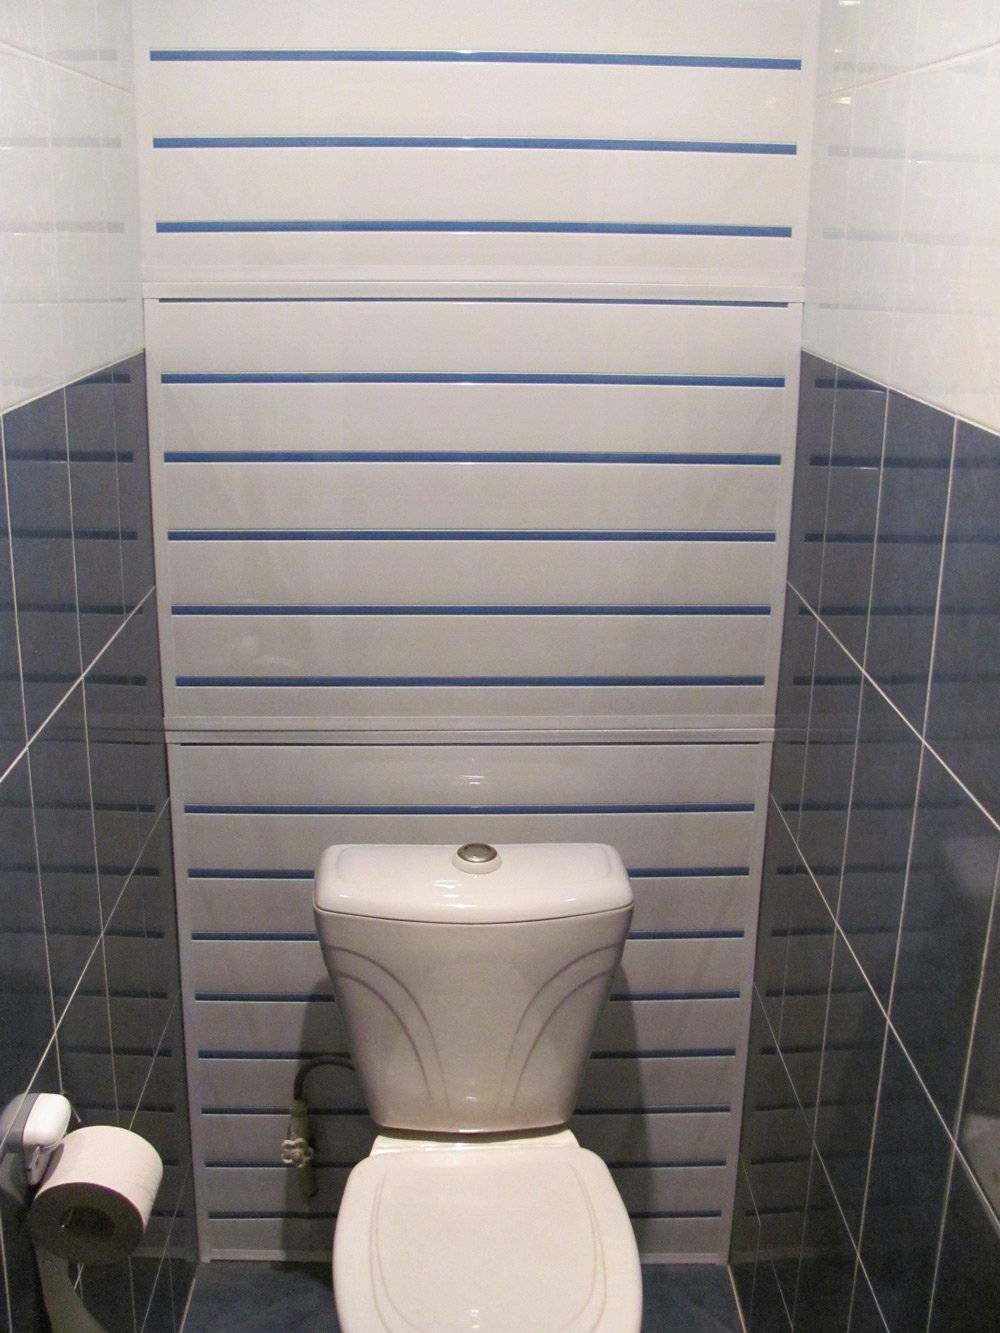 Отделка туалета пластиковыми панелями - выбор материала